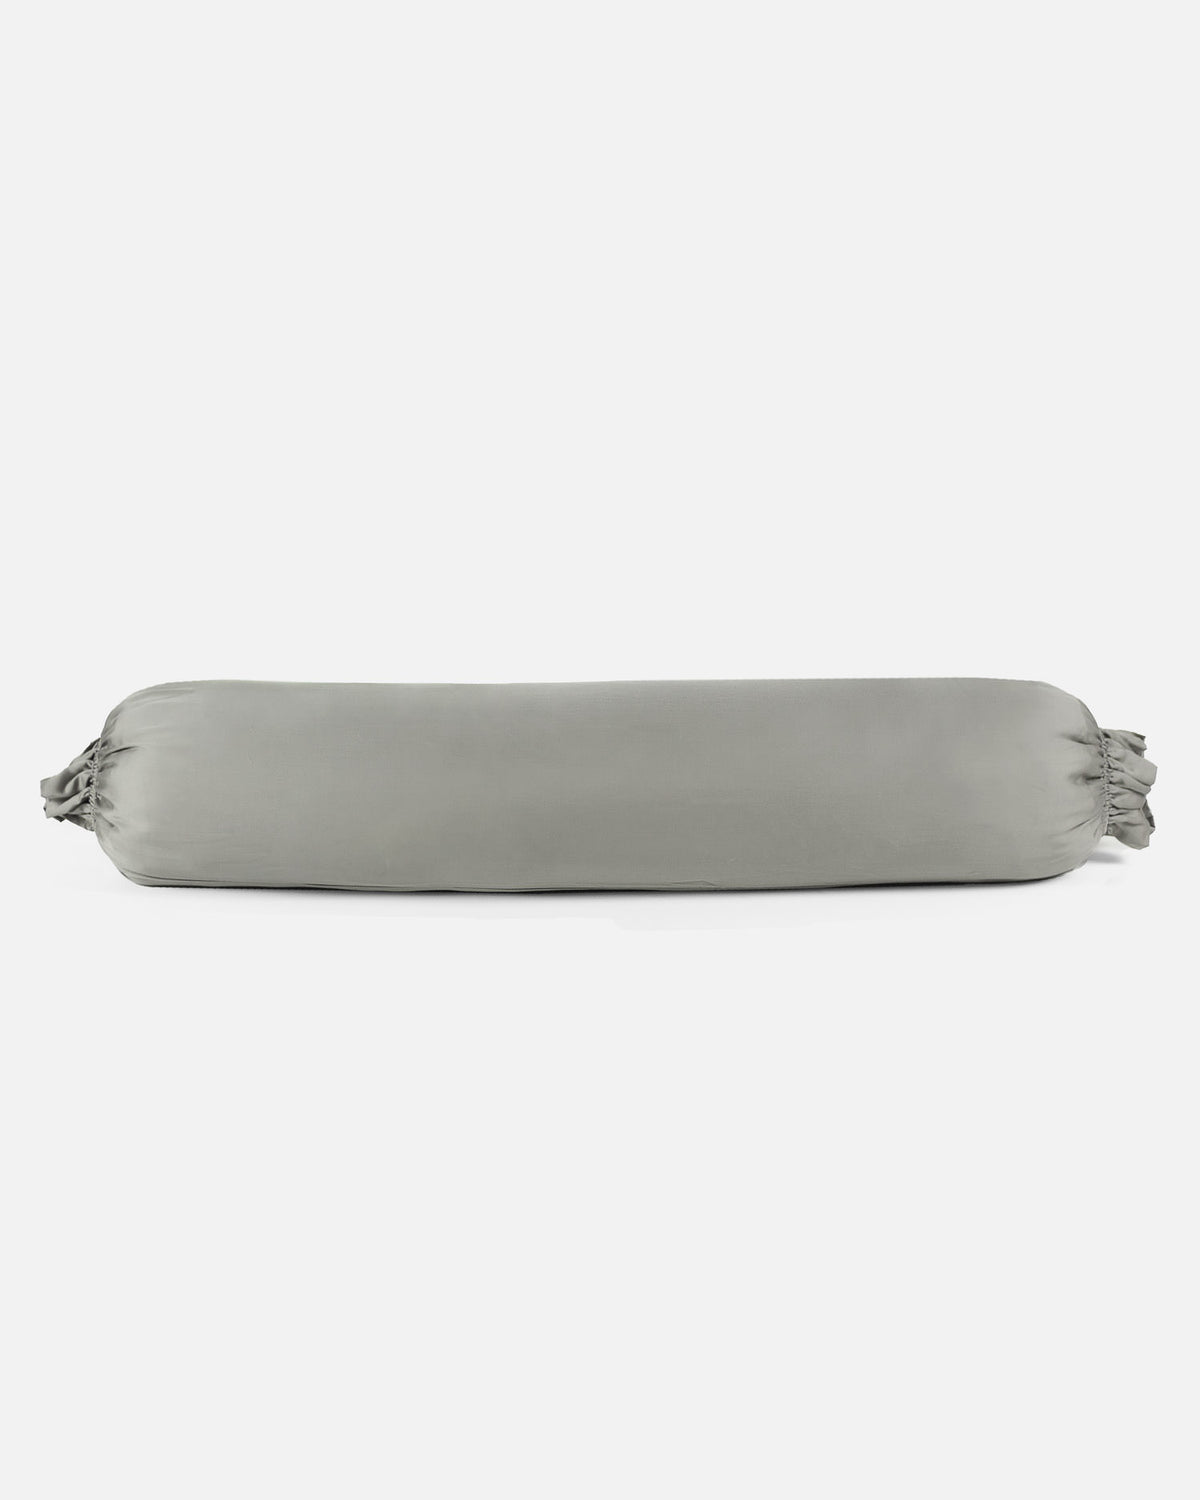 ava and ava ph organic bamboo lyocell bolster case / hotdog pillow / long pillow / po-tsim pillowcase in gray